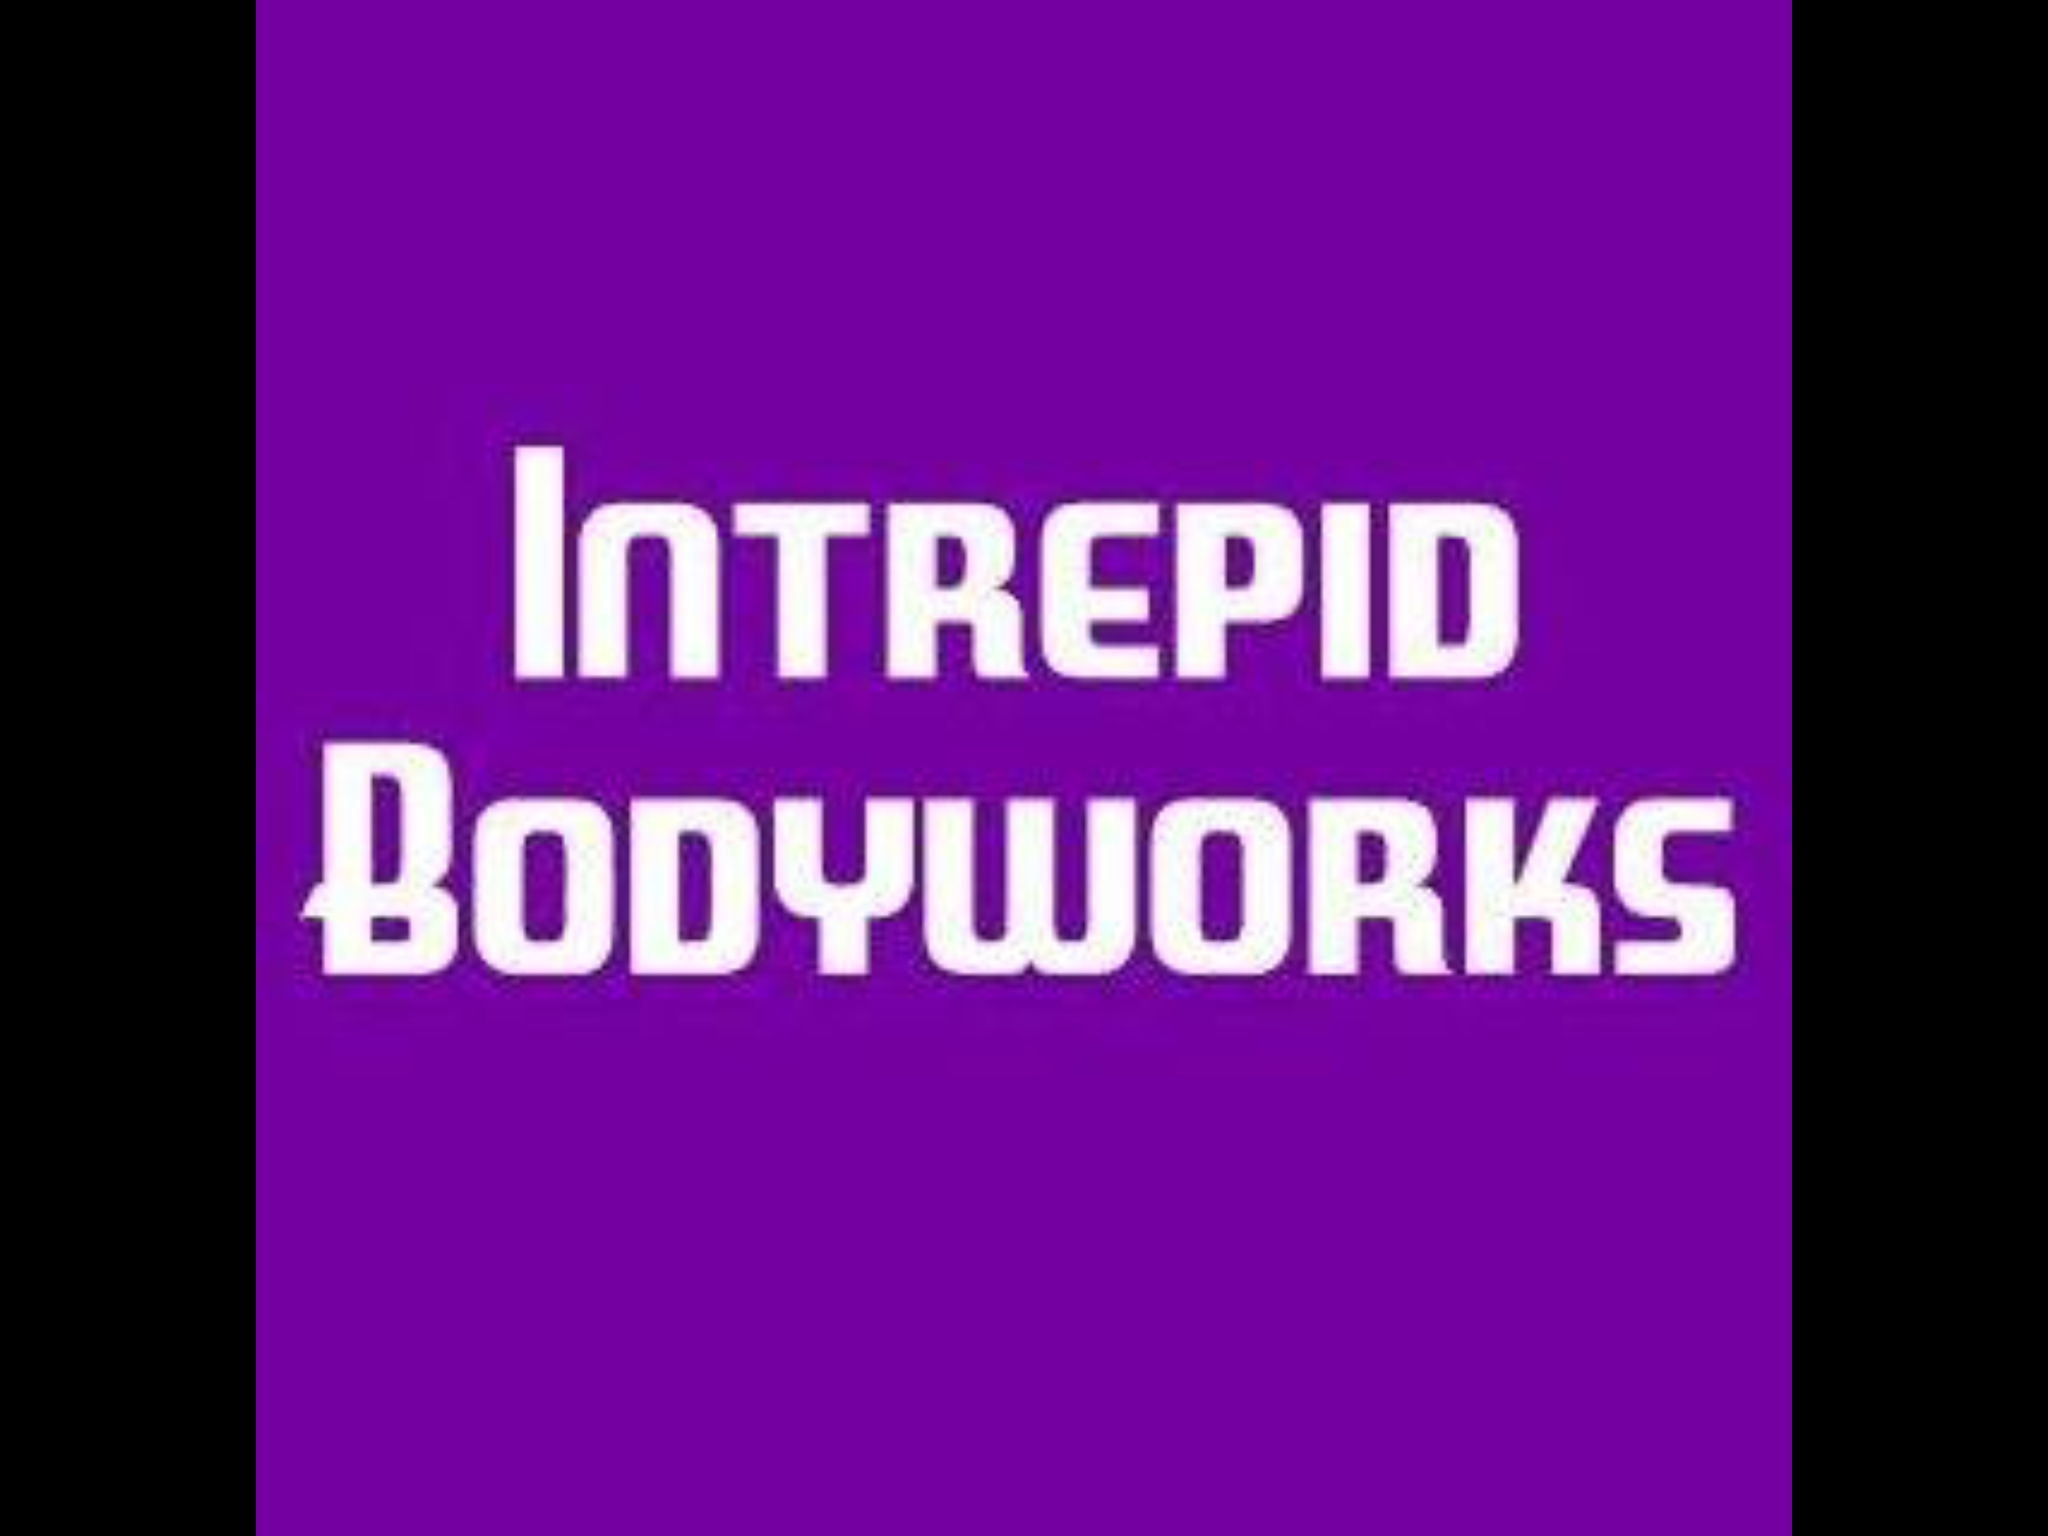 Intrepid Bodyworks